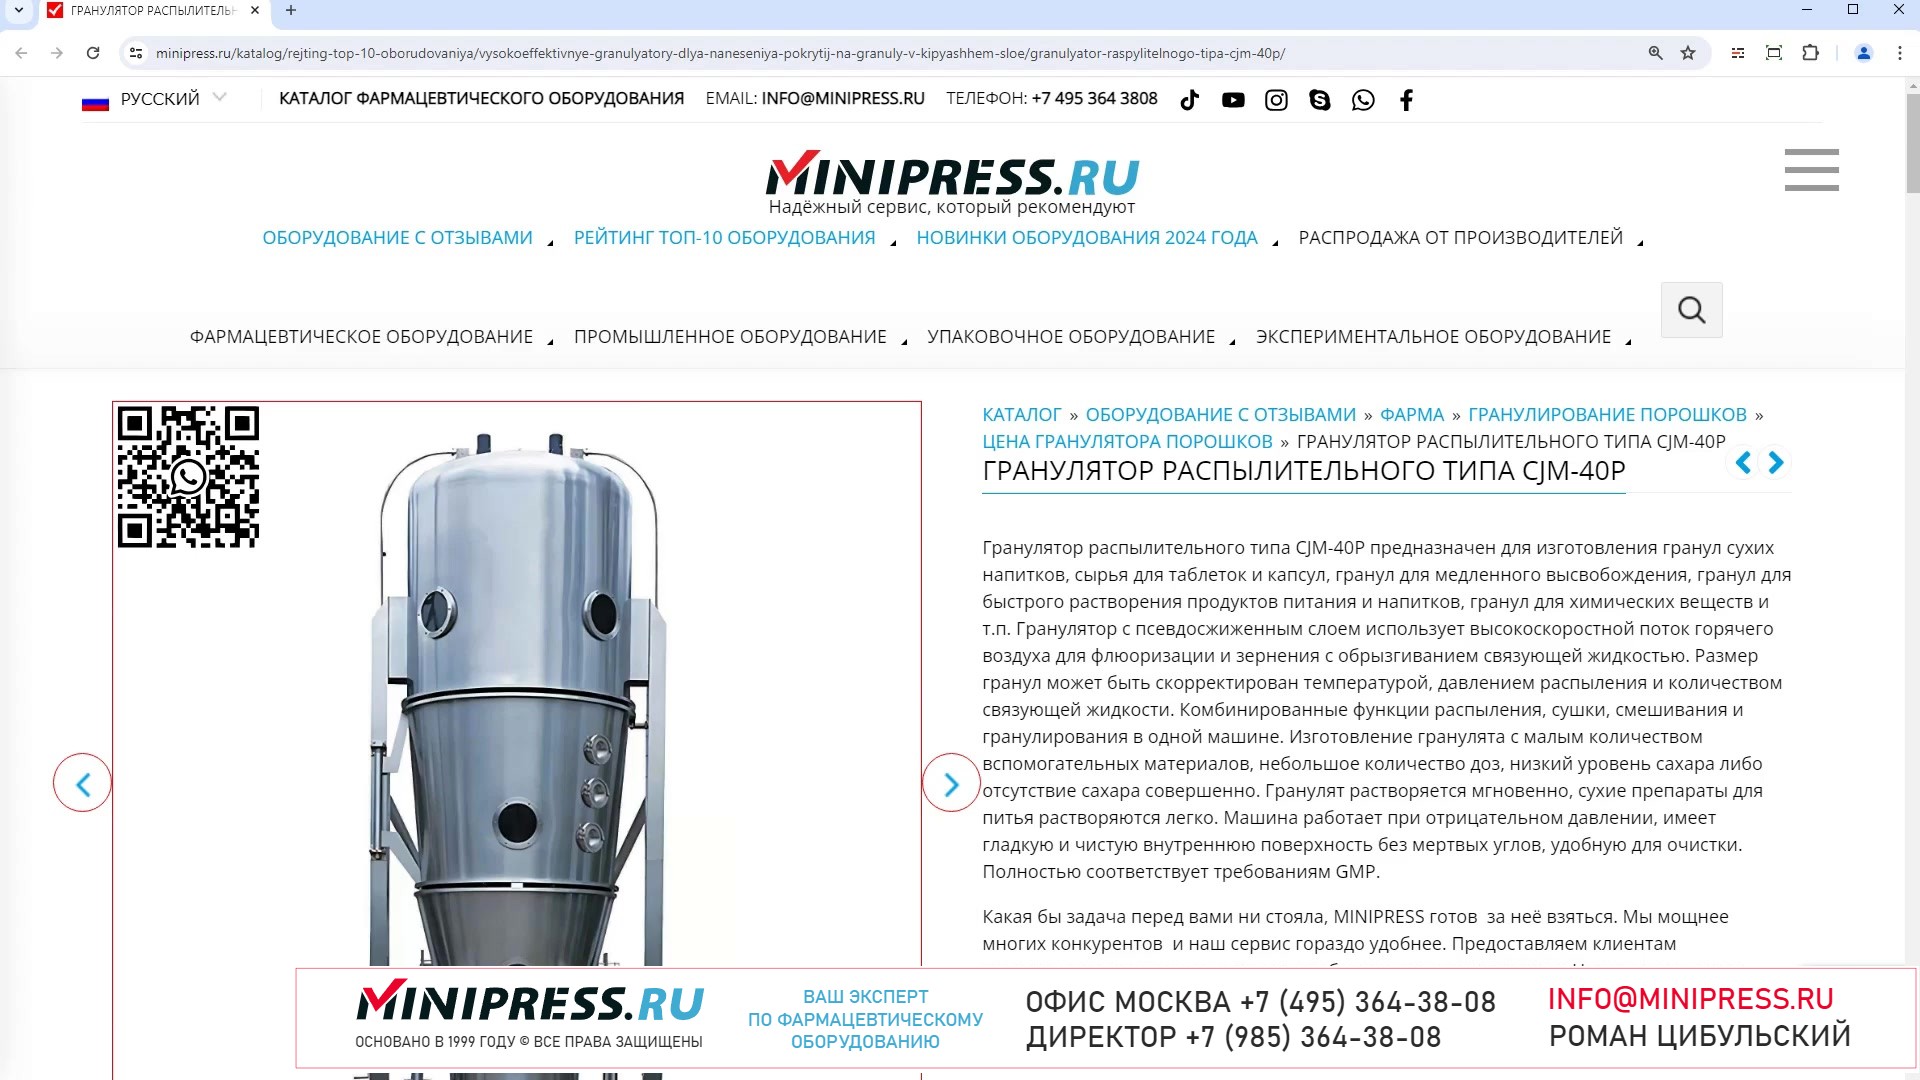 Minipress.ru Гранулятор распылительного типа CJM-40P